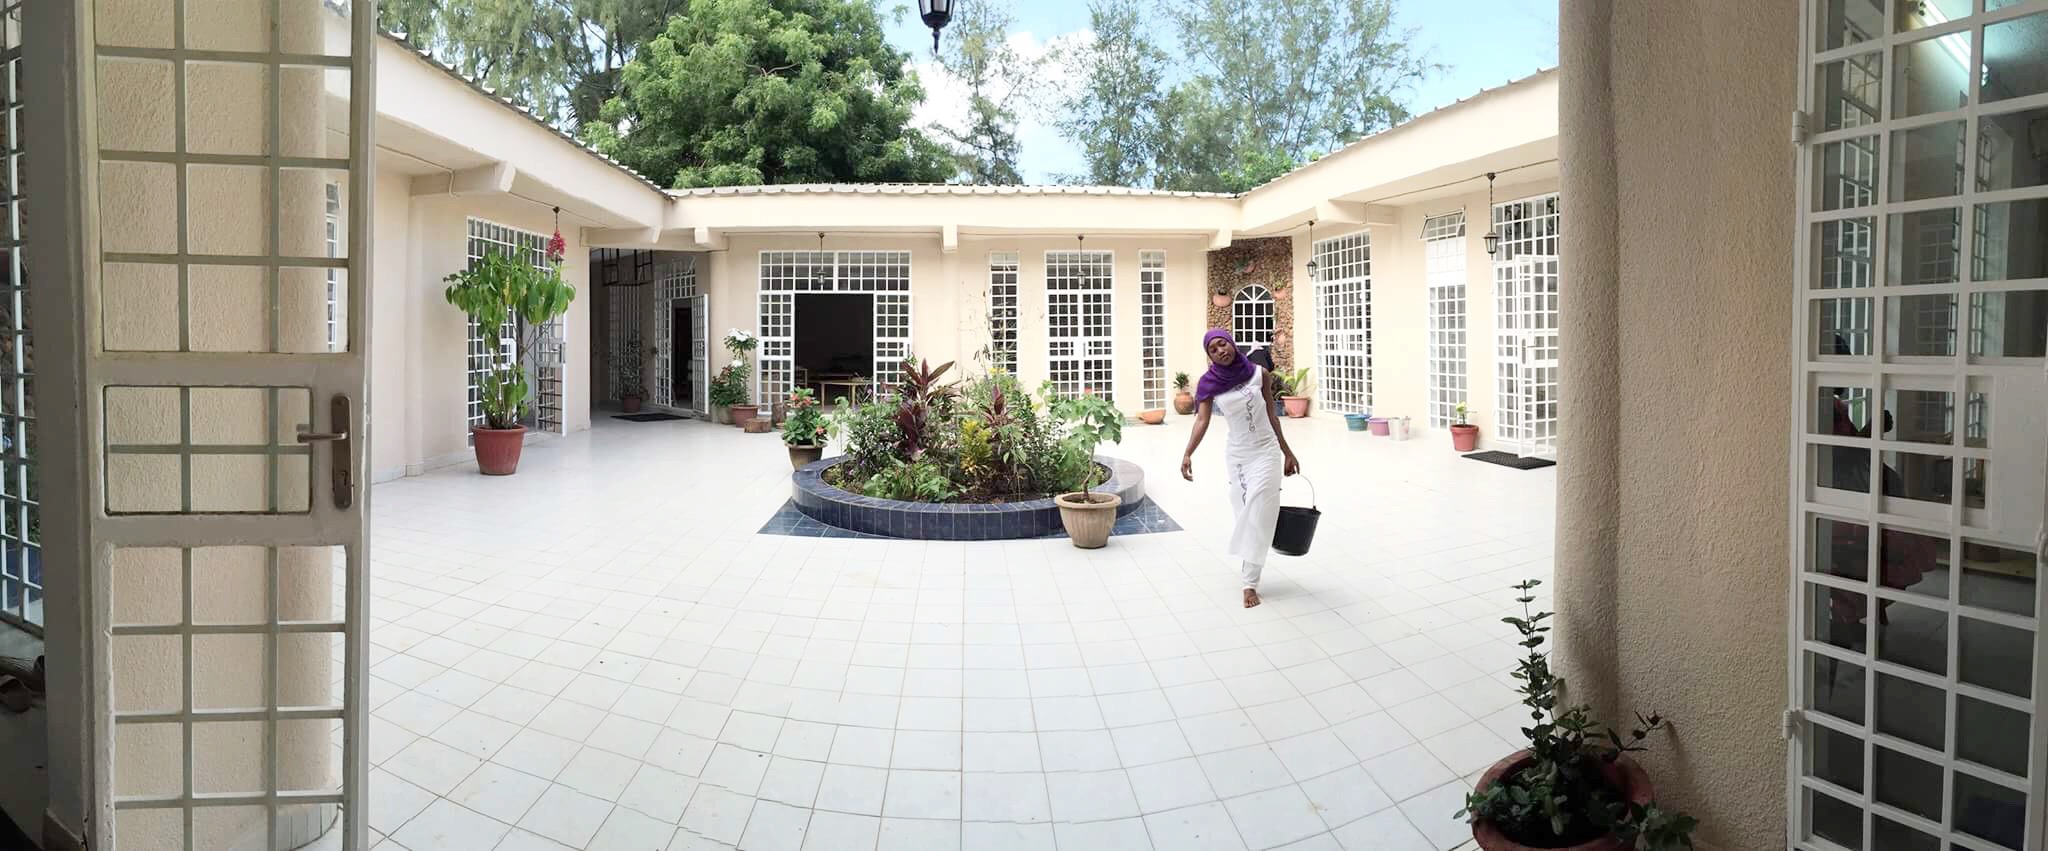 courtyard Montessori classroom Gambia